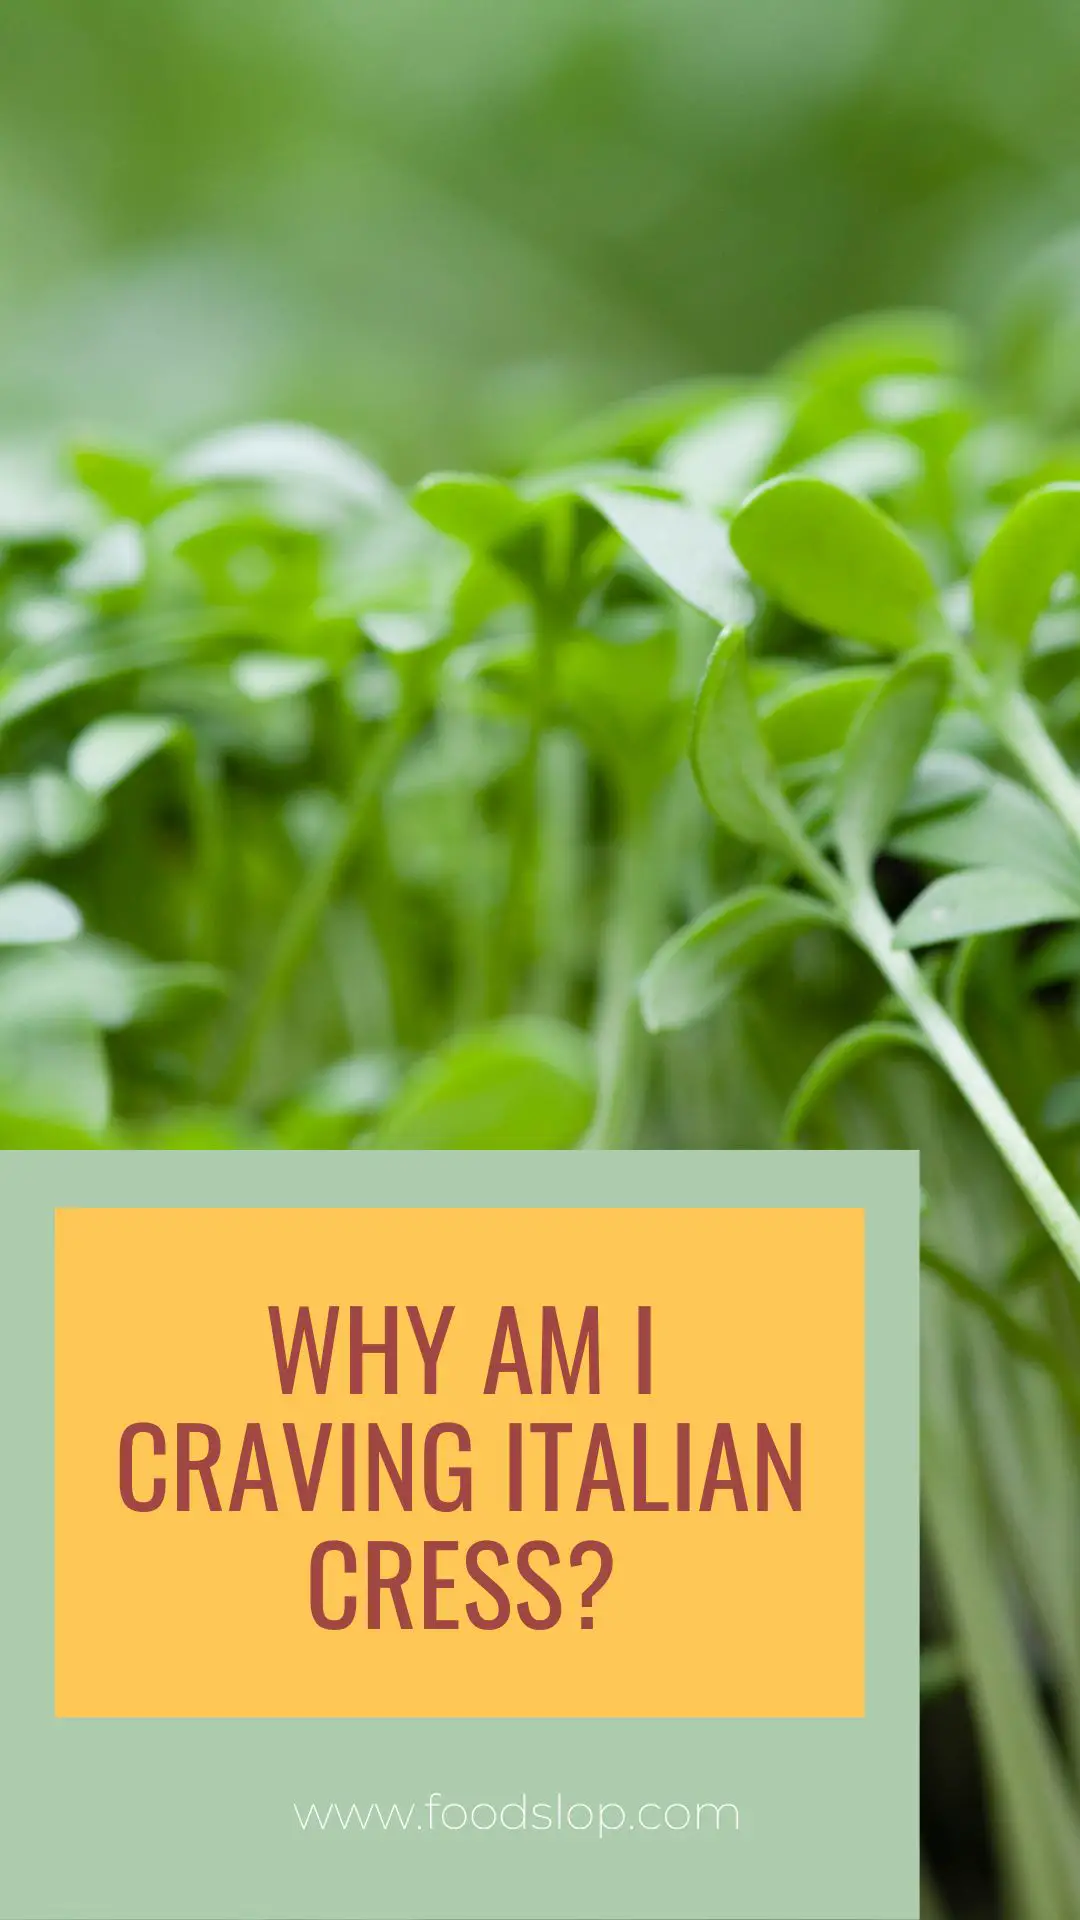 Why Am I Craving Italian Cress?